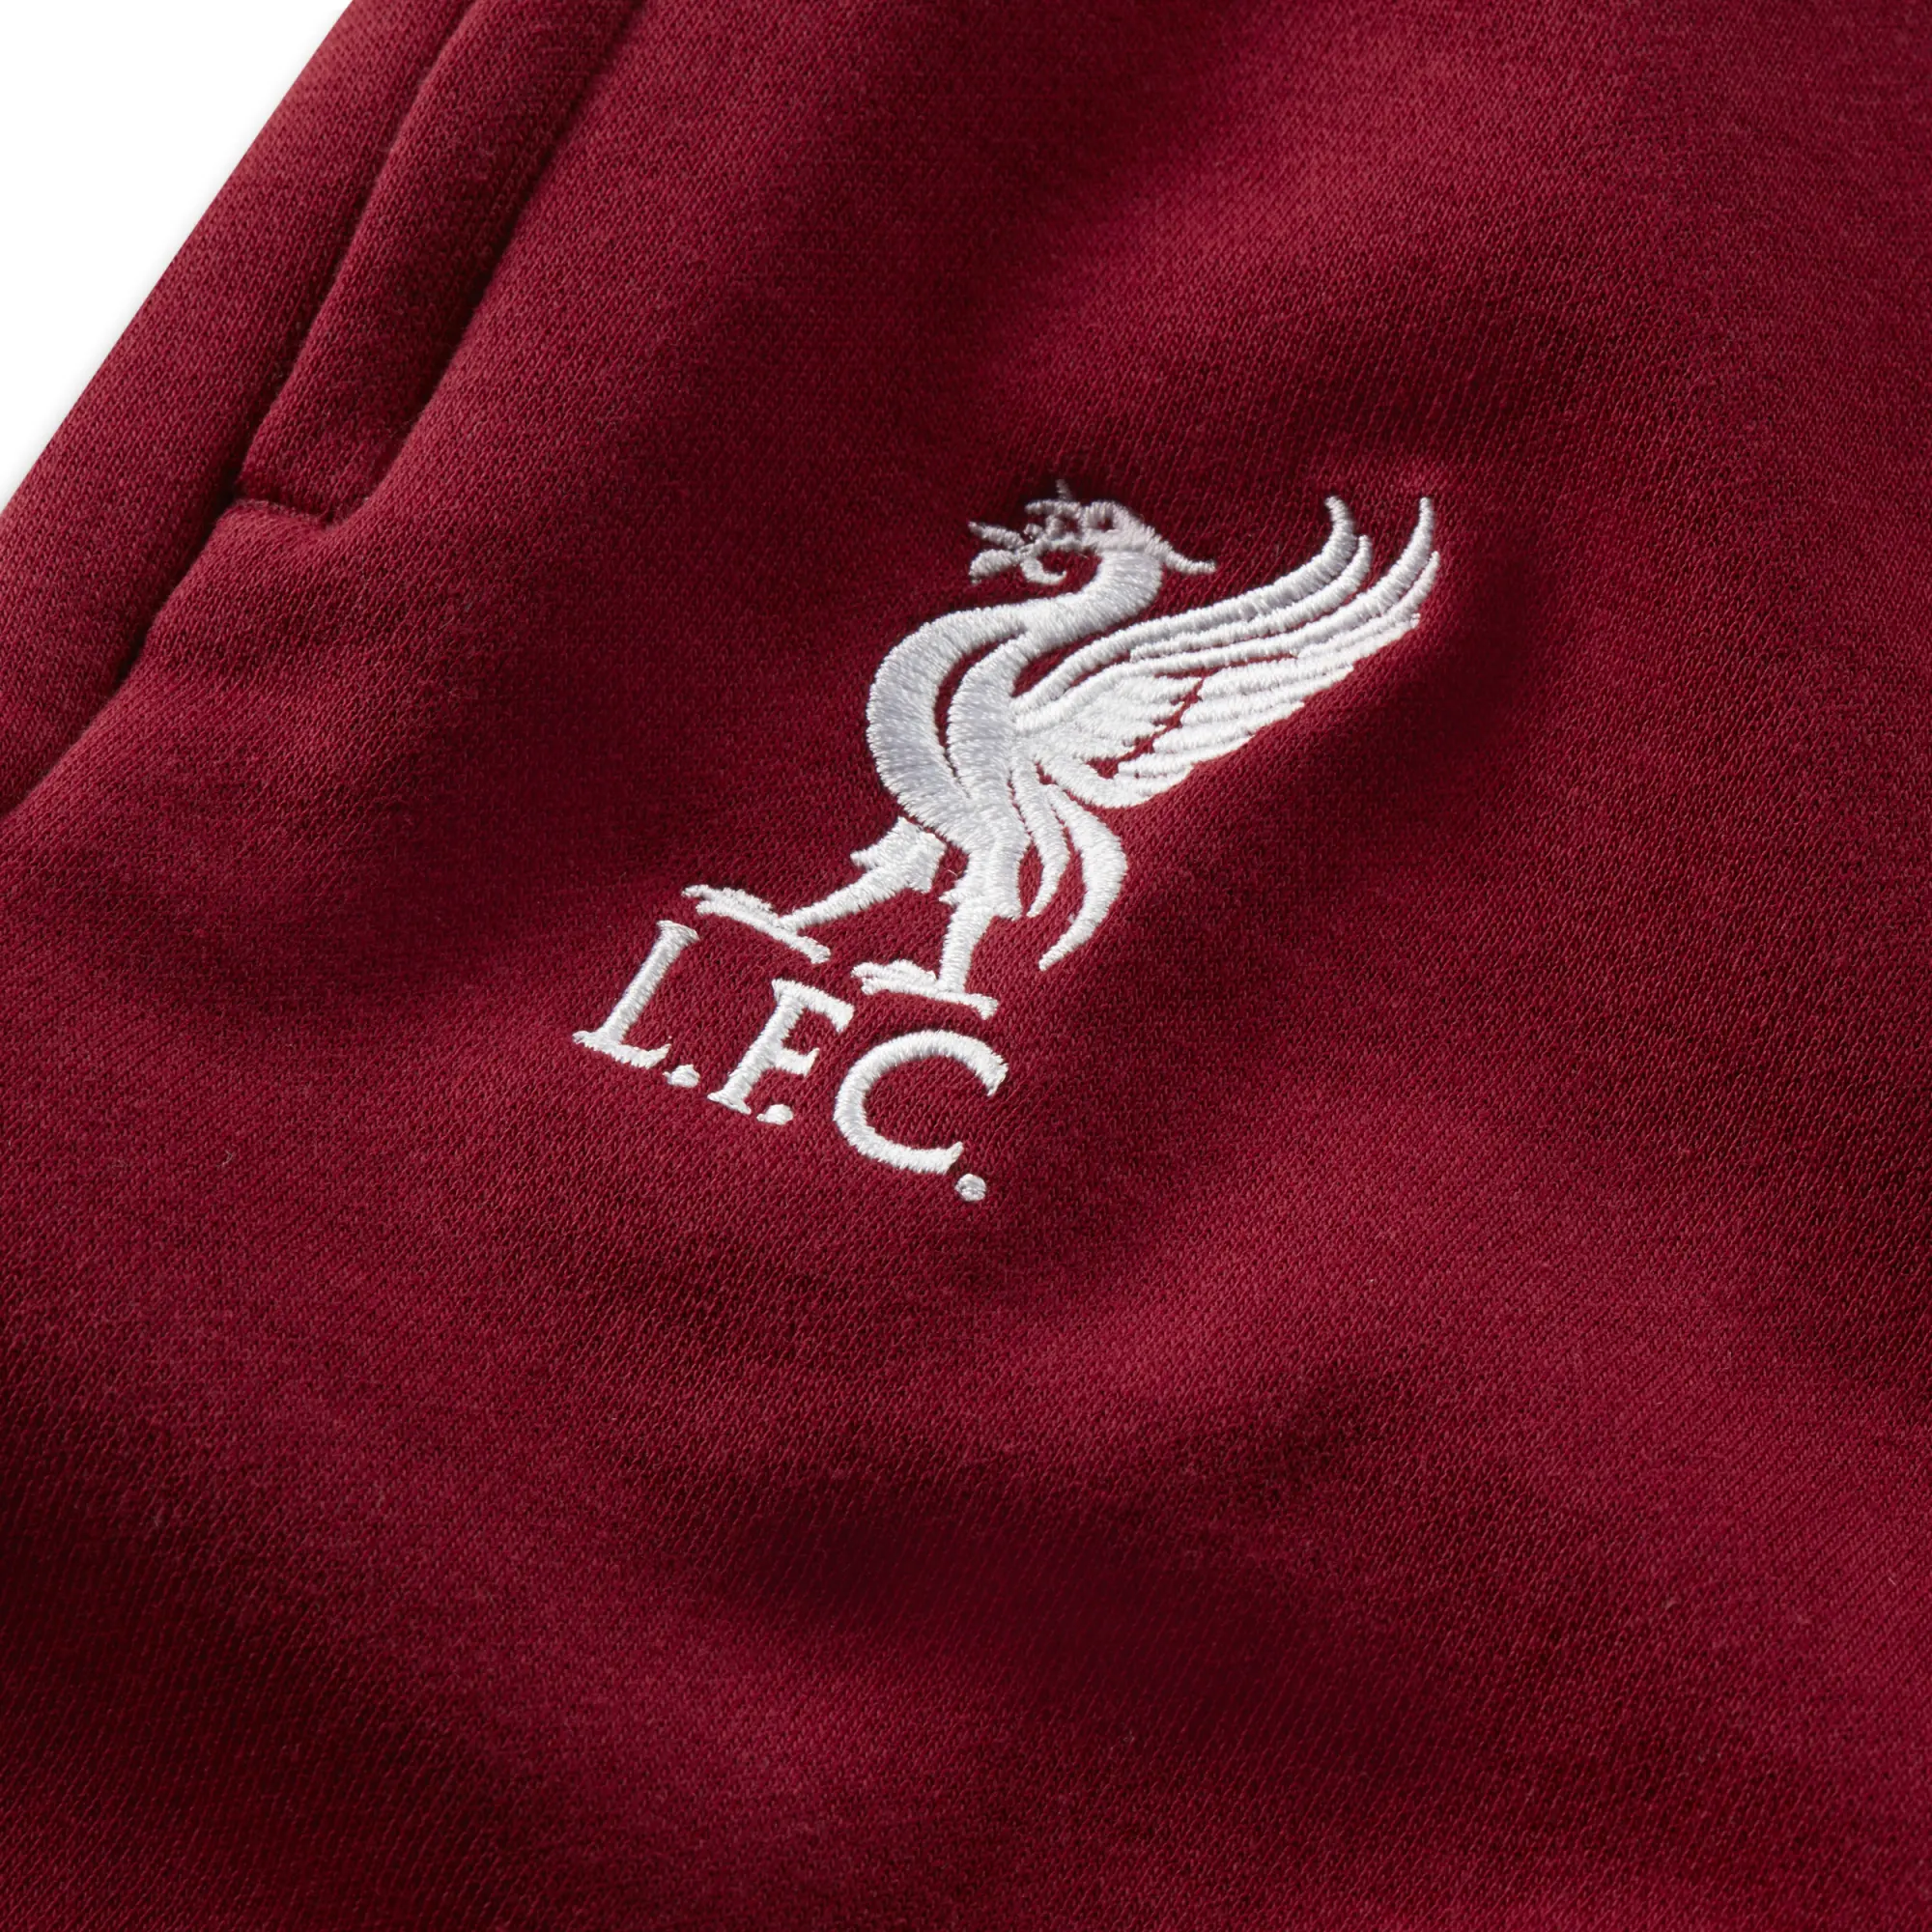 Liverpool F.C. Older Kids' Nike Fleece Pants - Red